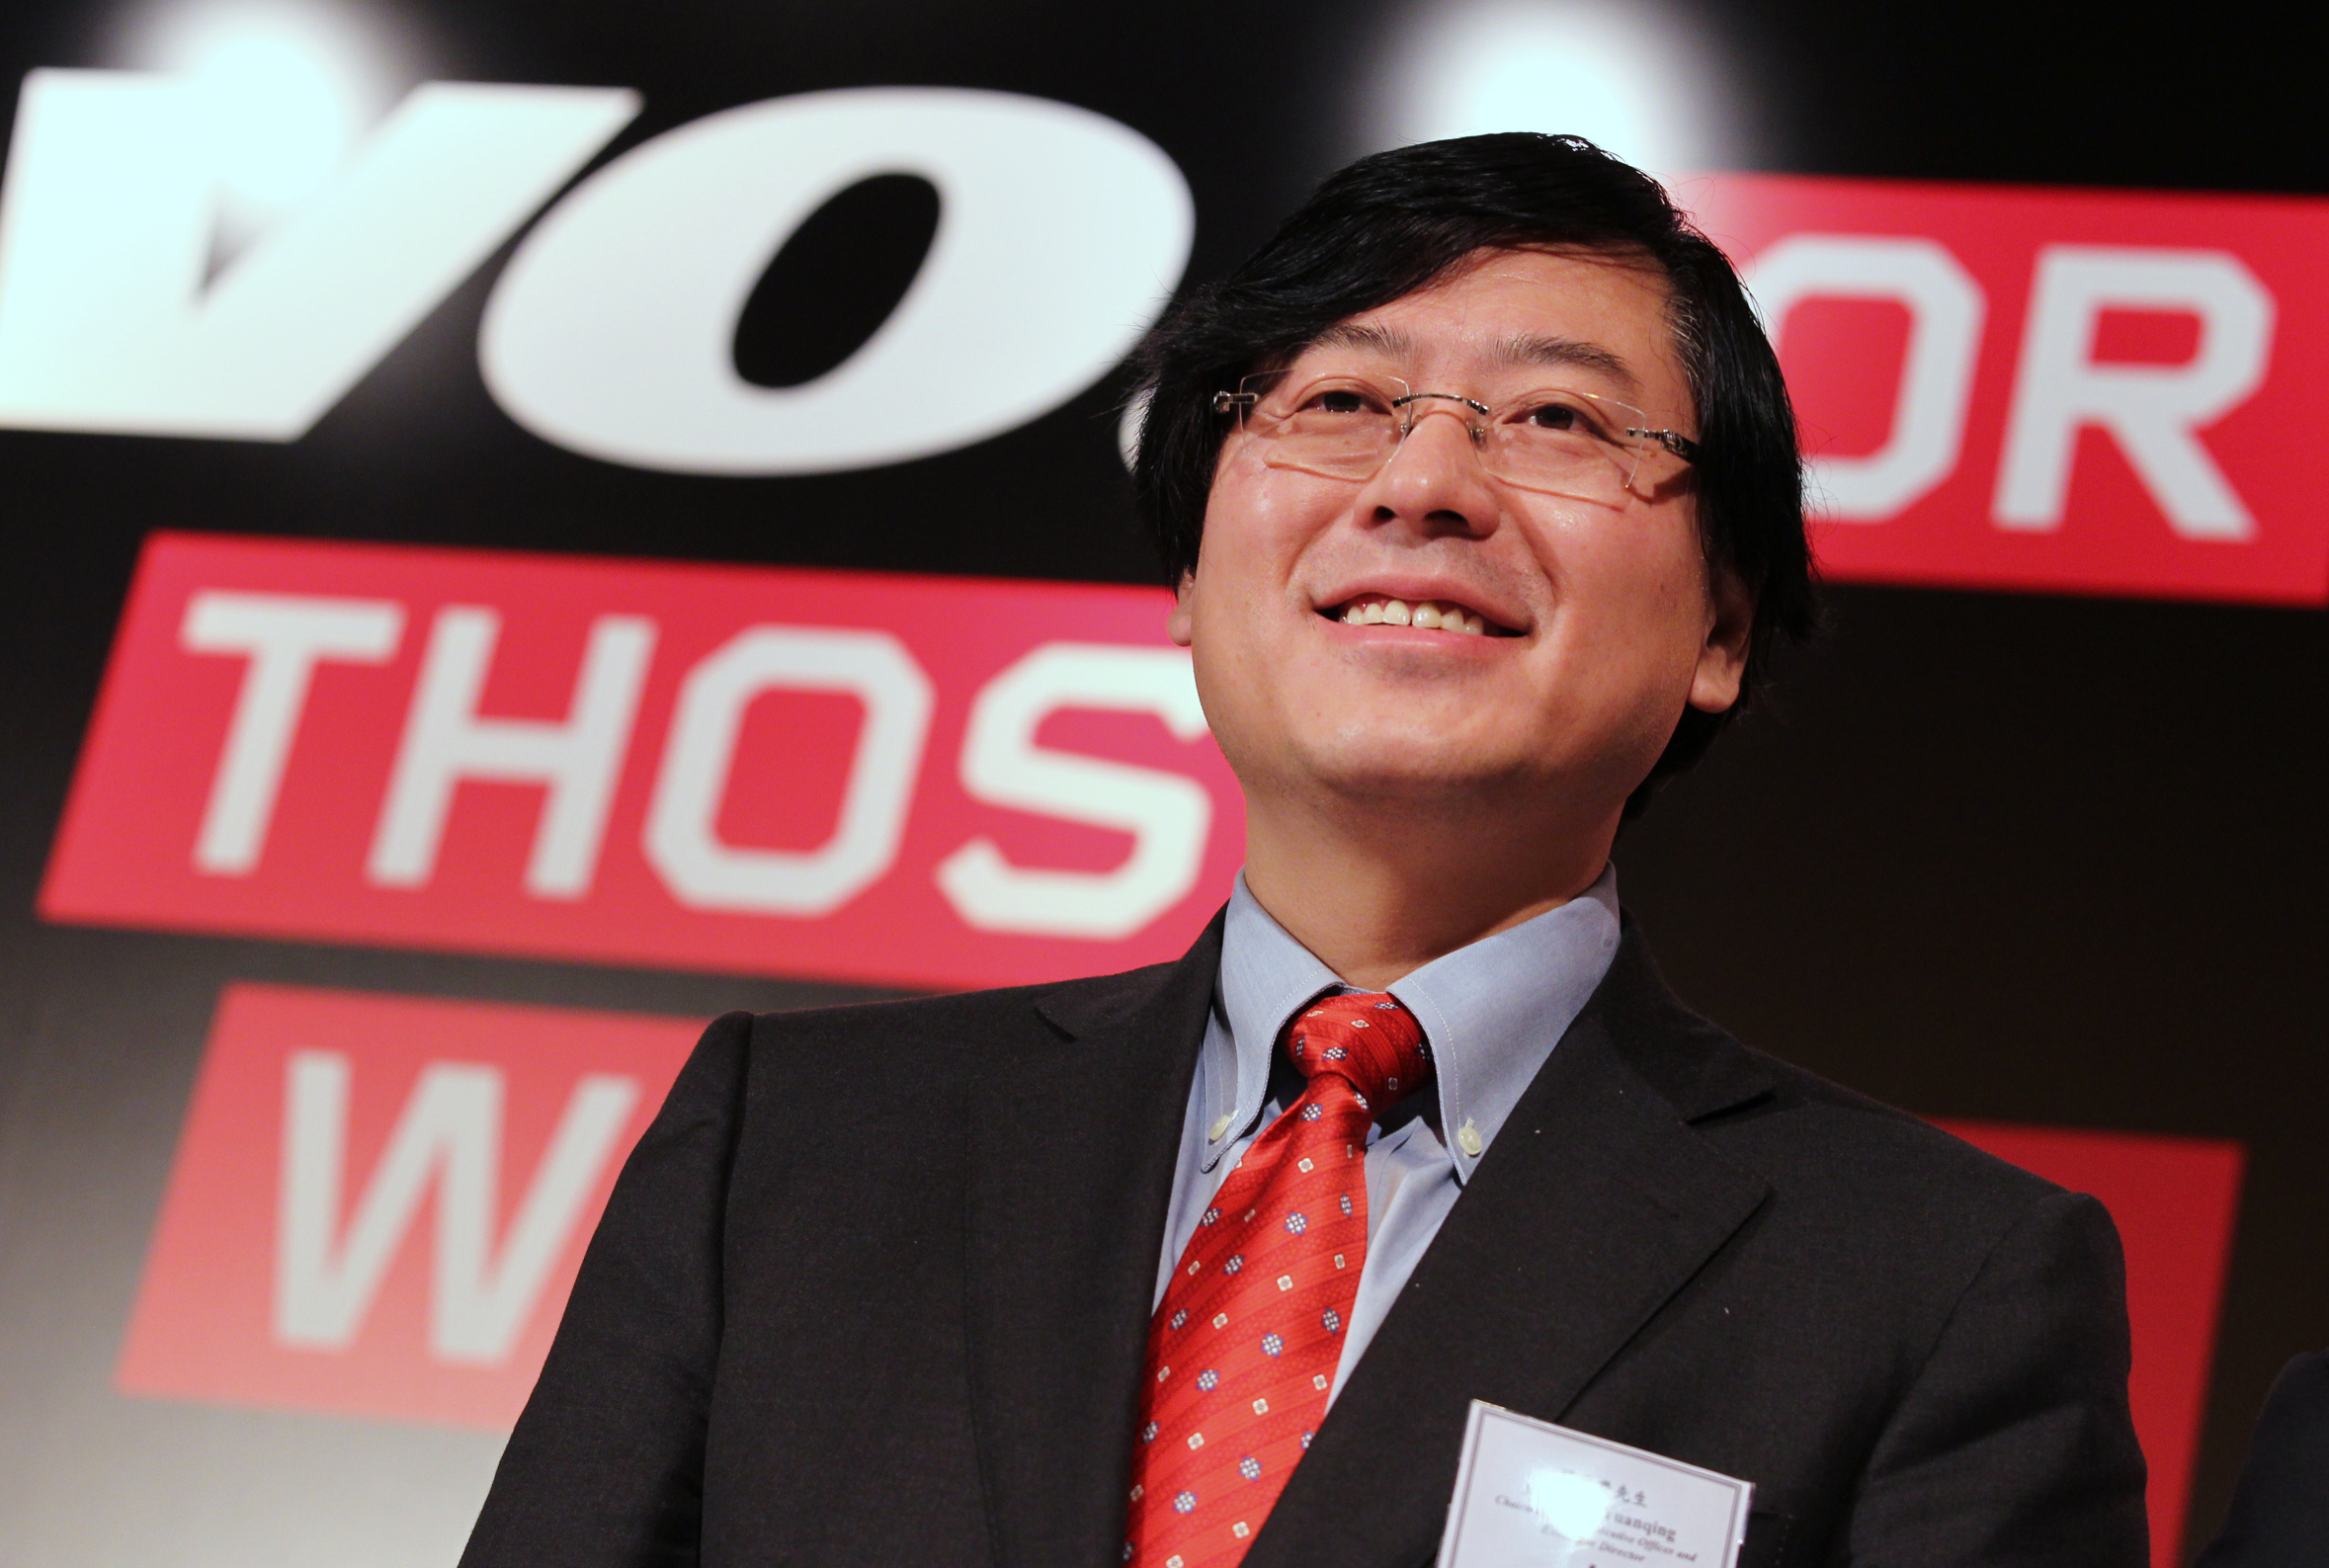 Yang Yuanqing, Chief Executive Officer of Lenovo. Photo: Nora Tam